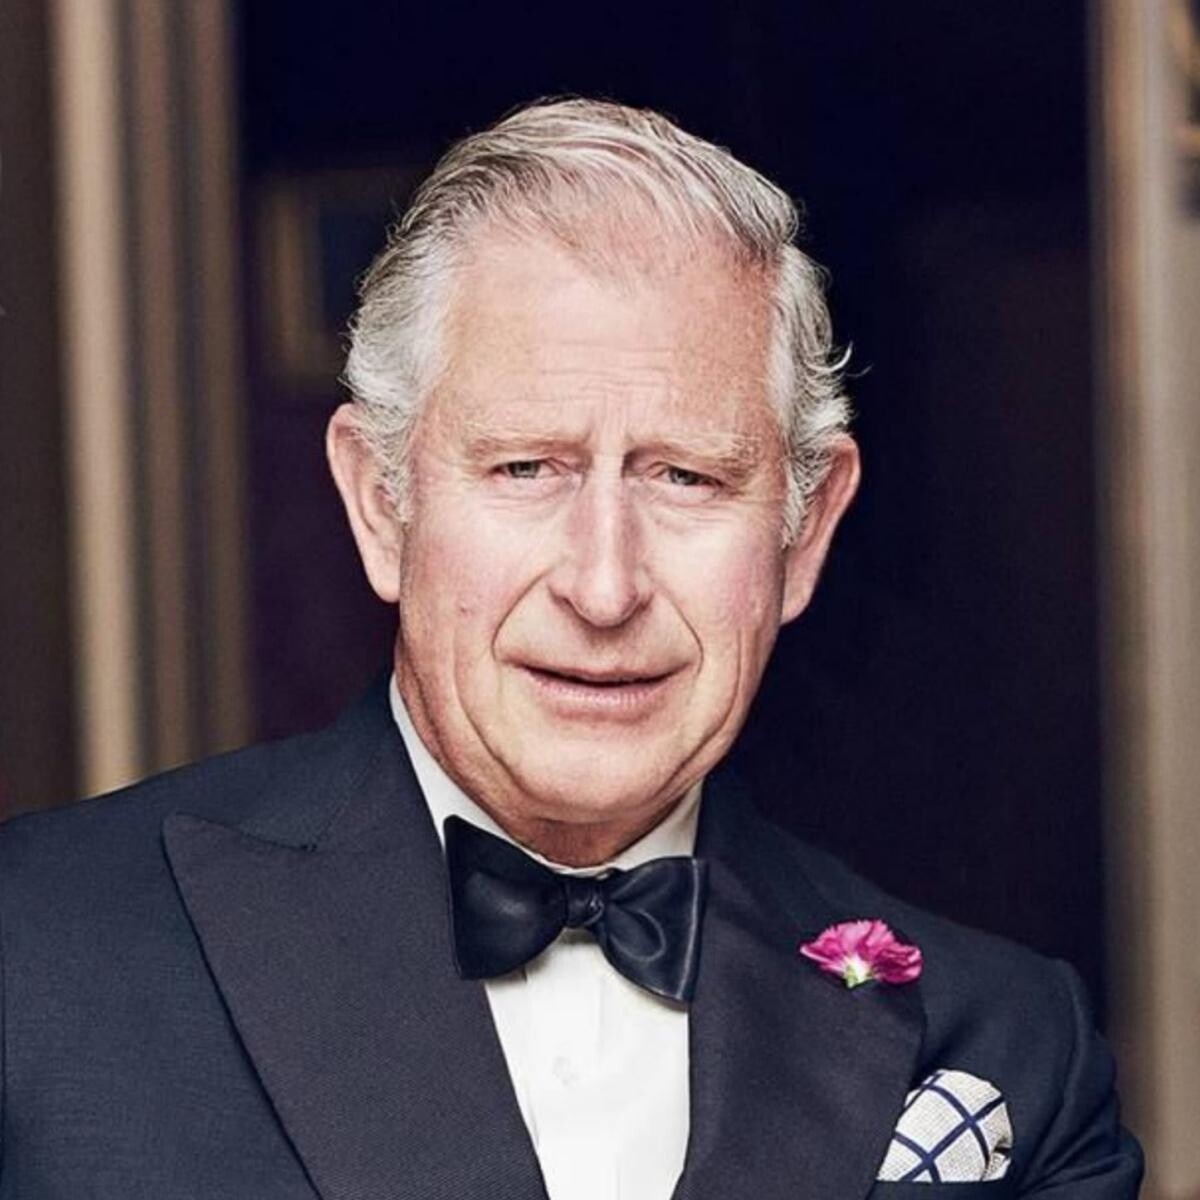 sursă foto: Facebook, oficial Charles, King of United Kingdom